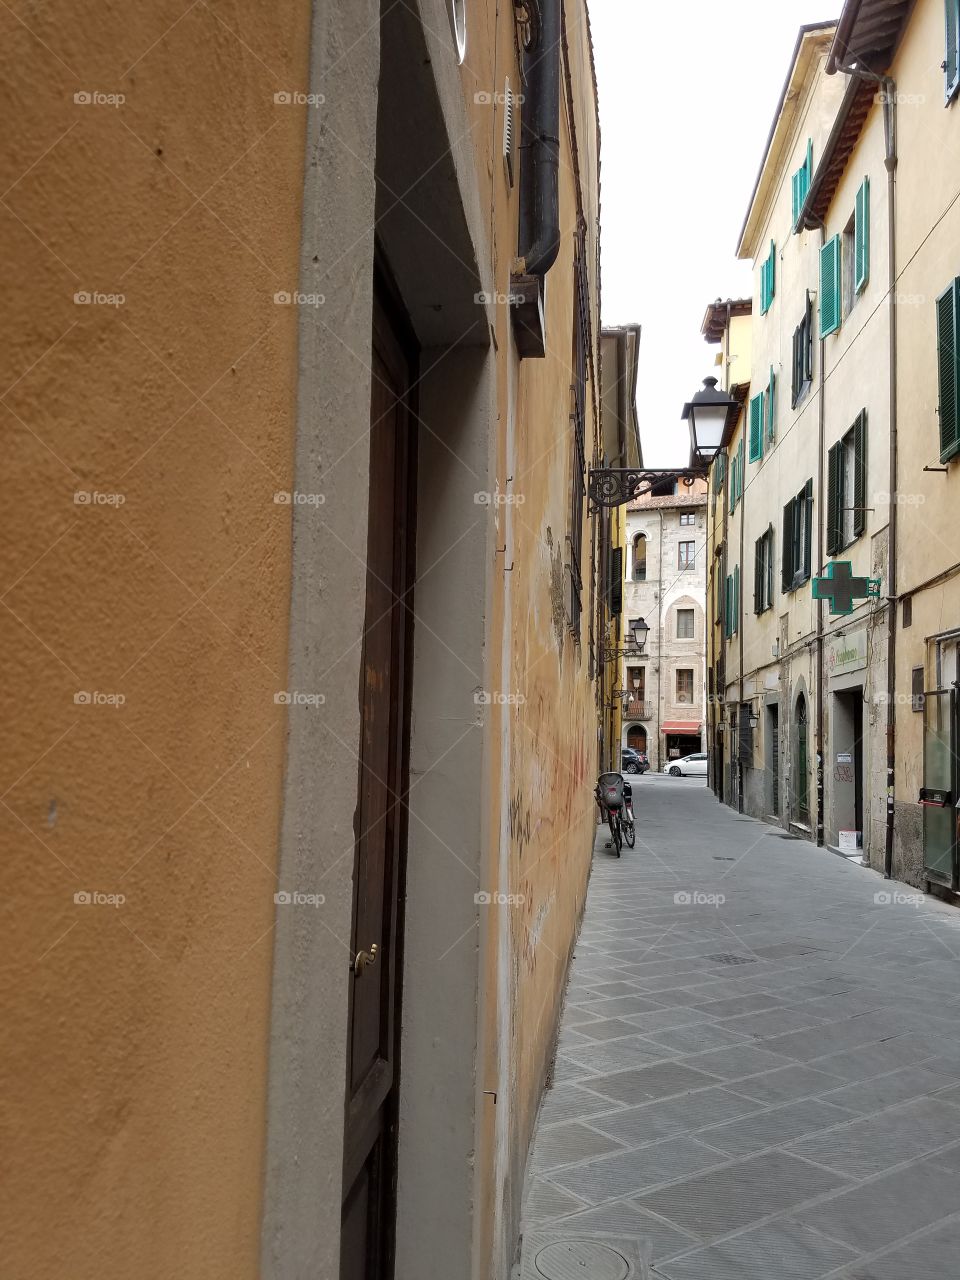 Streets of Pisa Italy